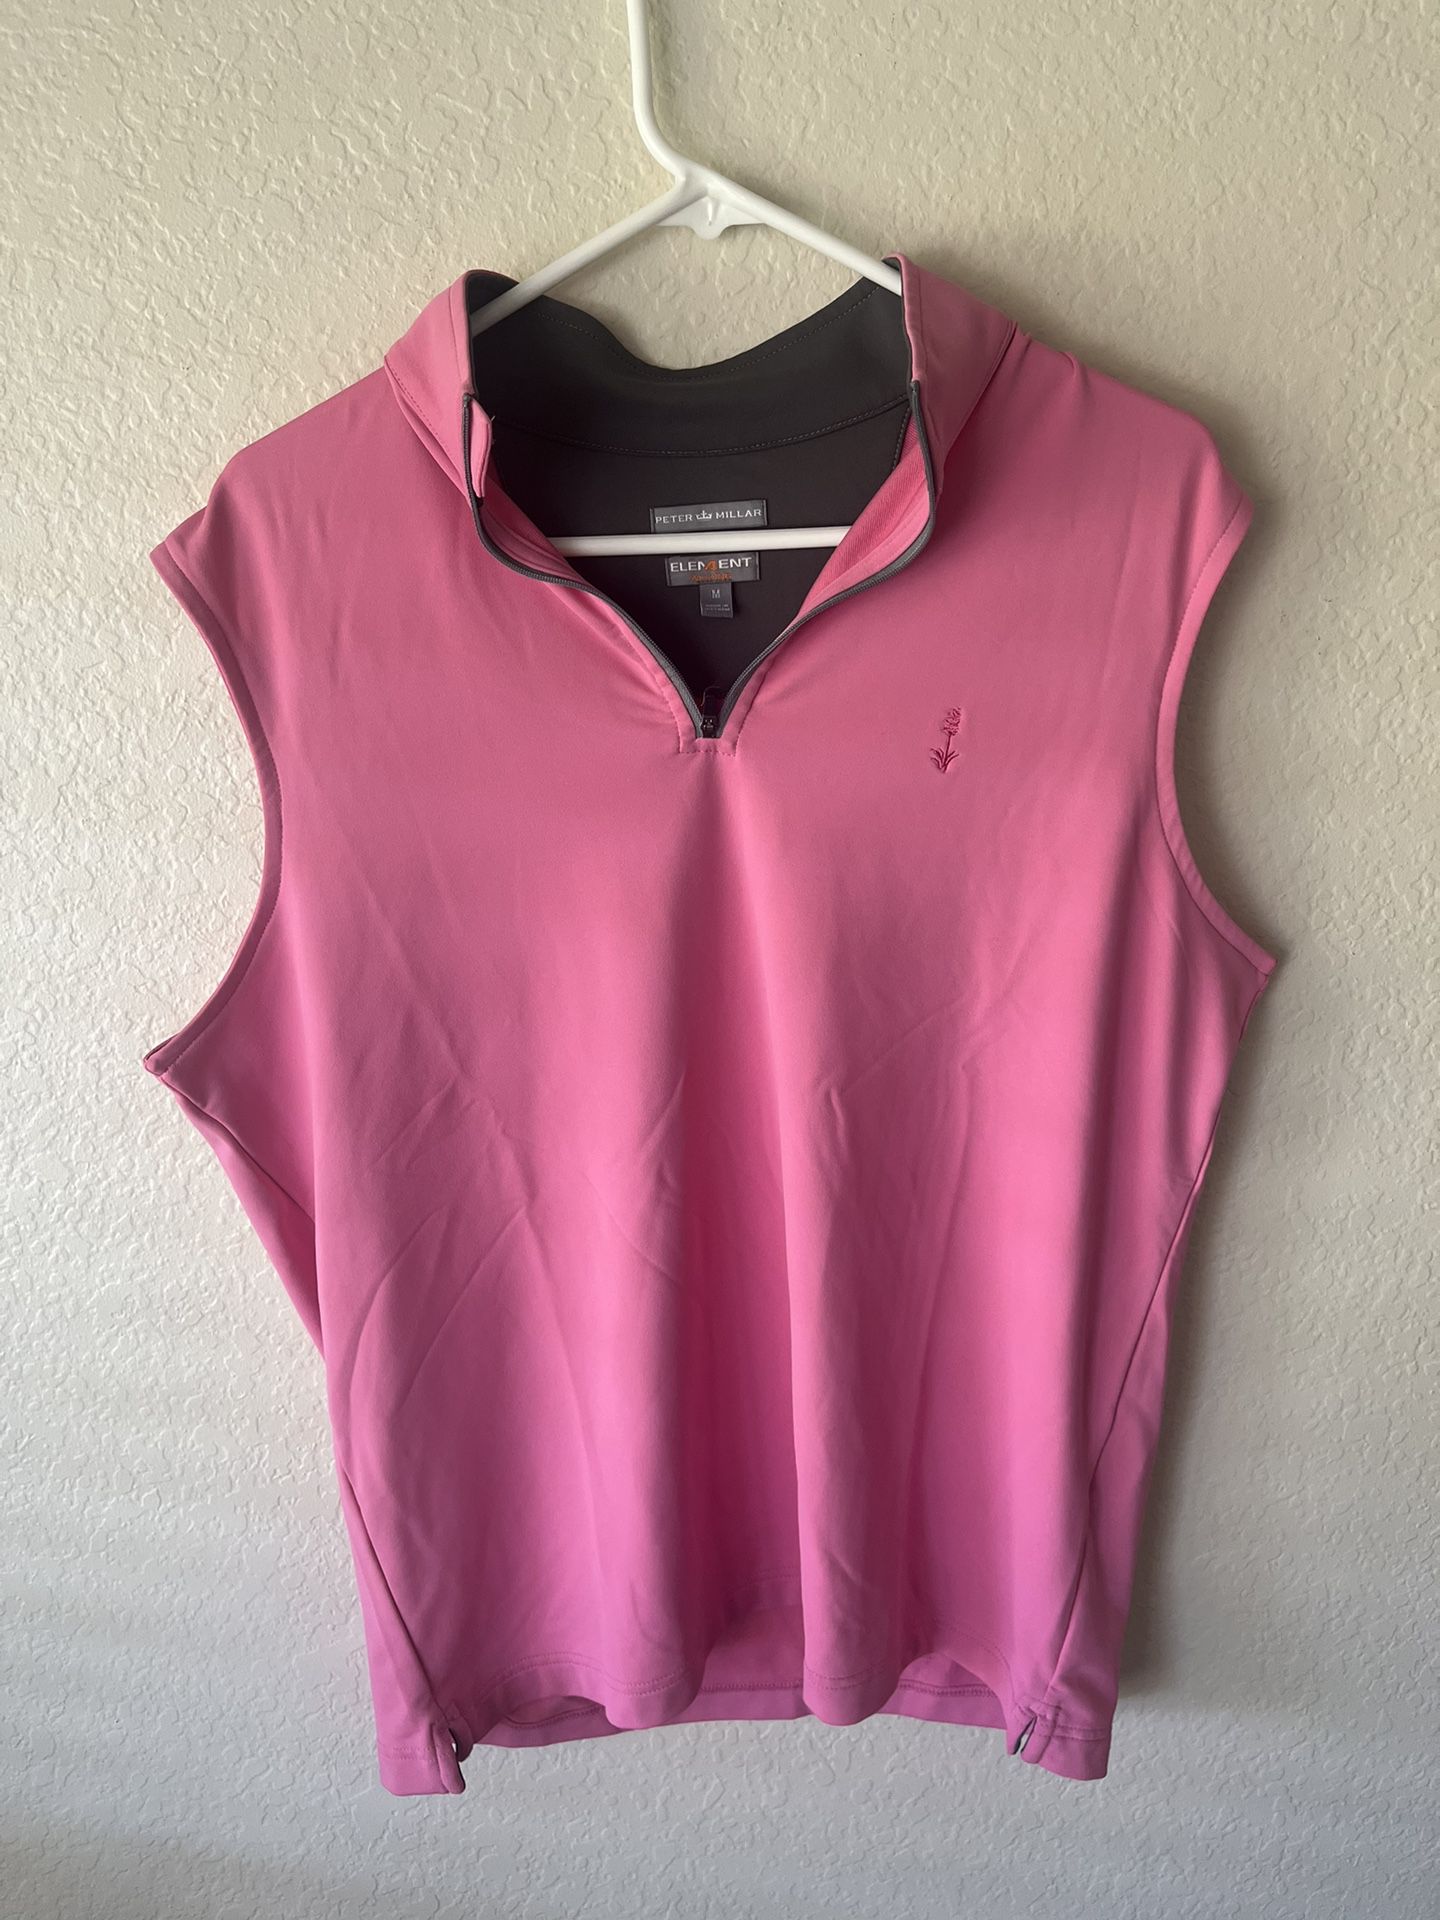 Peter Millar E4 Element 4 1/4 Zip Pink Golf Vest Men’s Size Medium